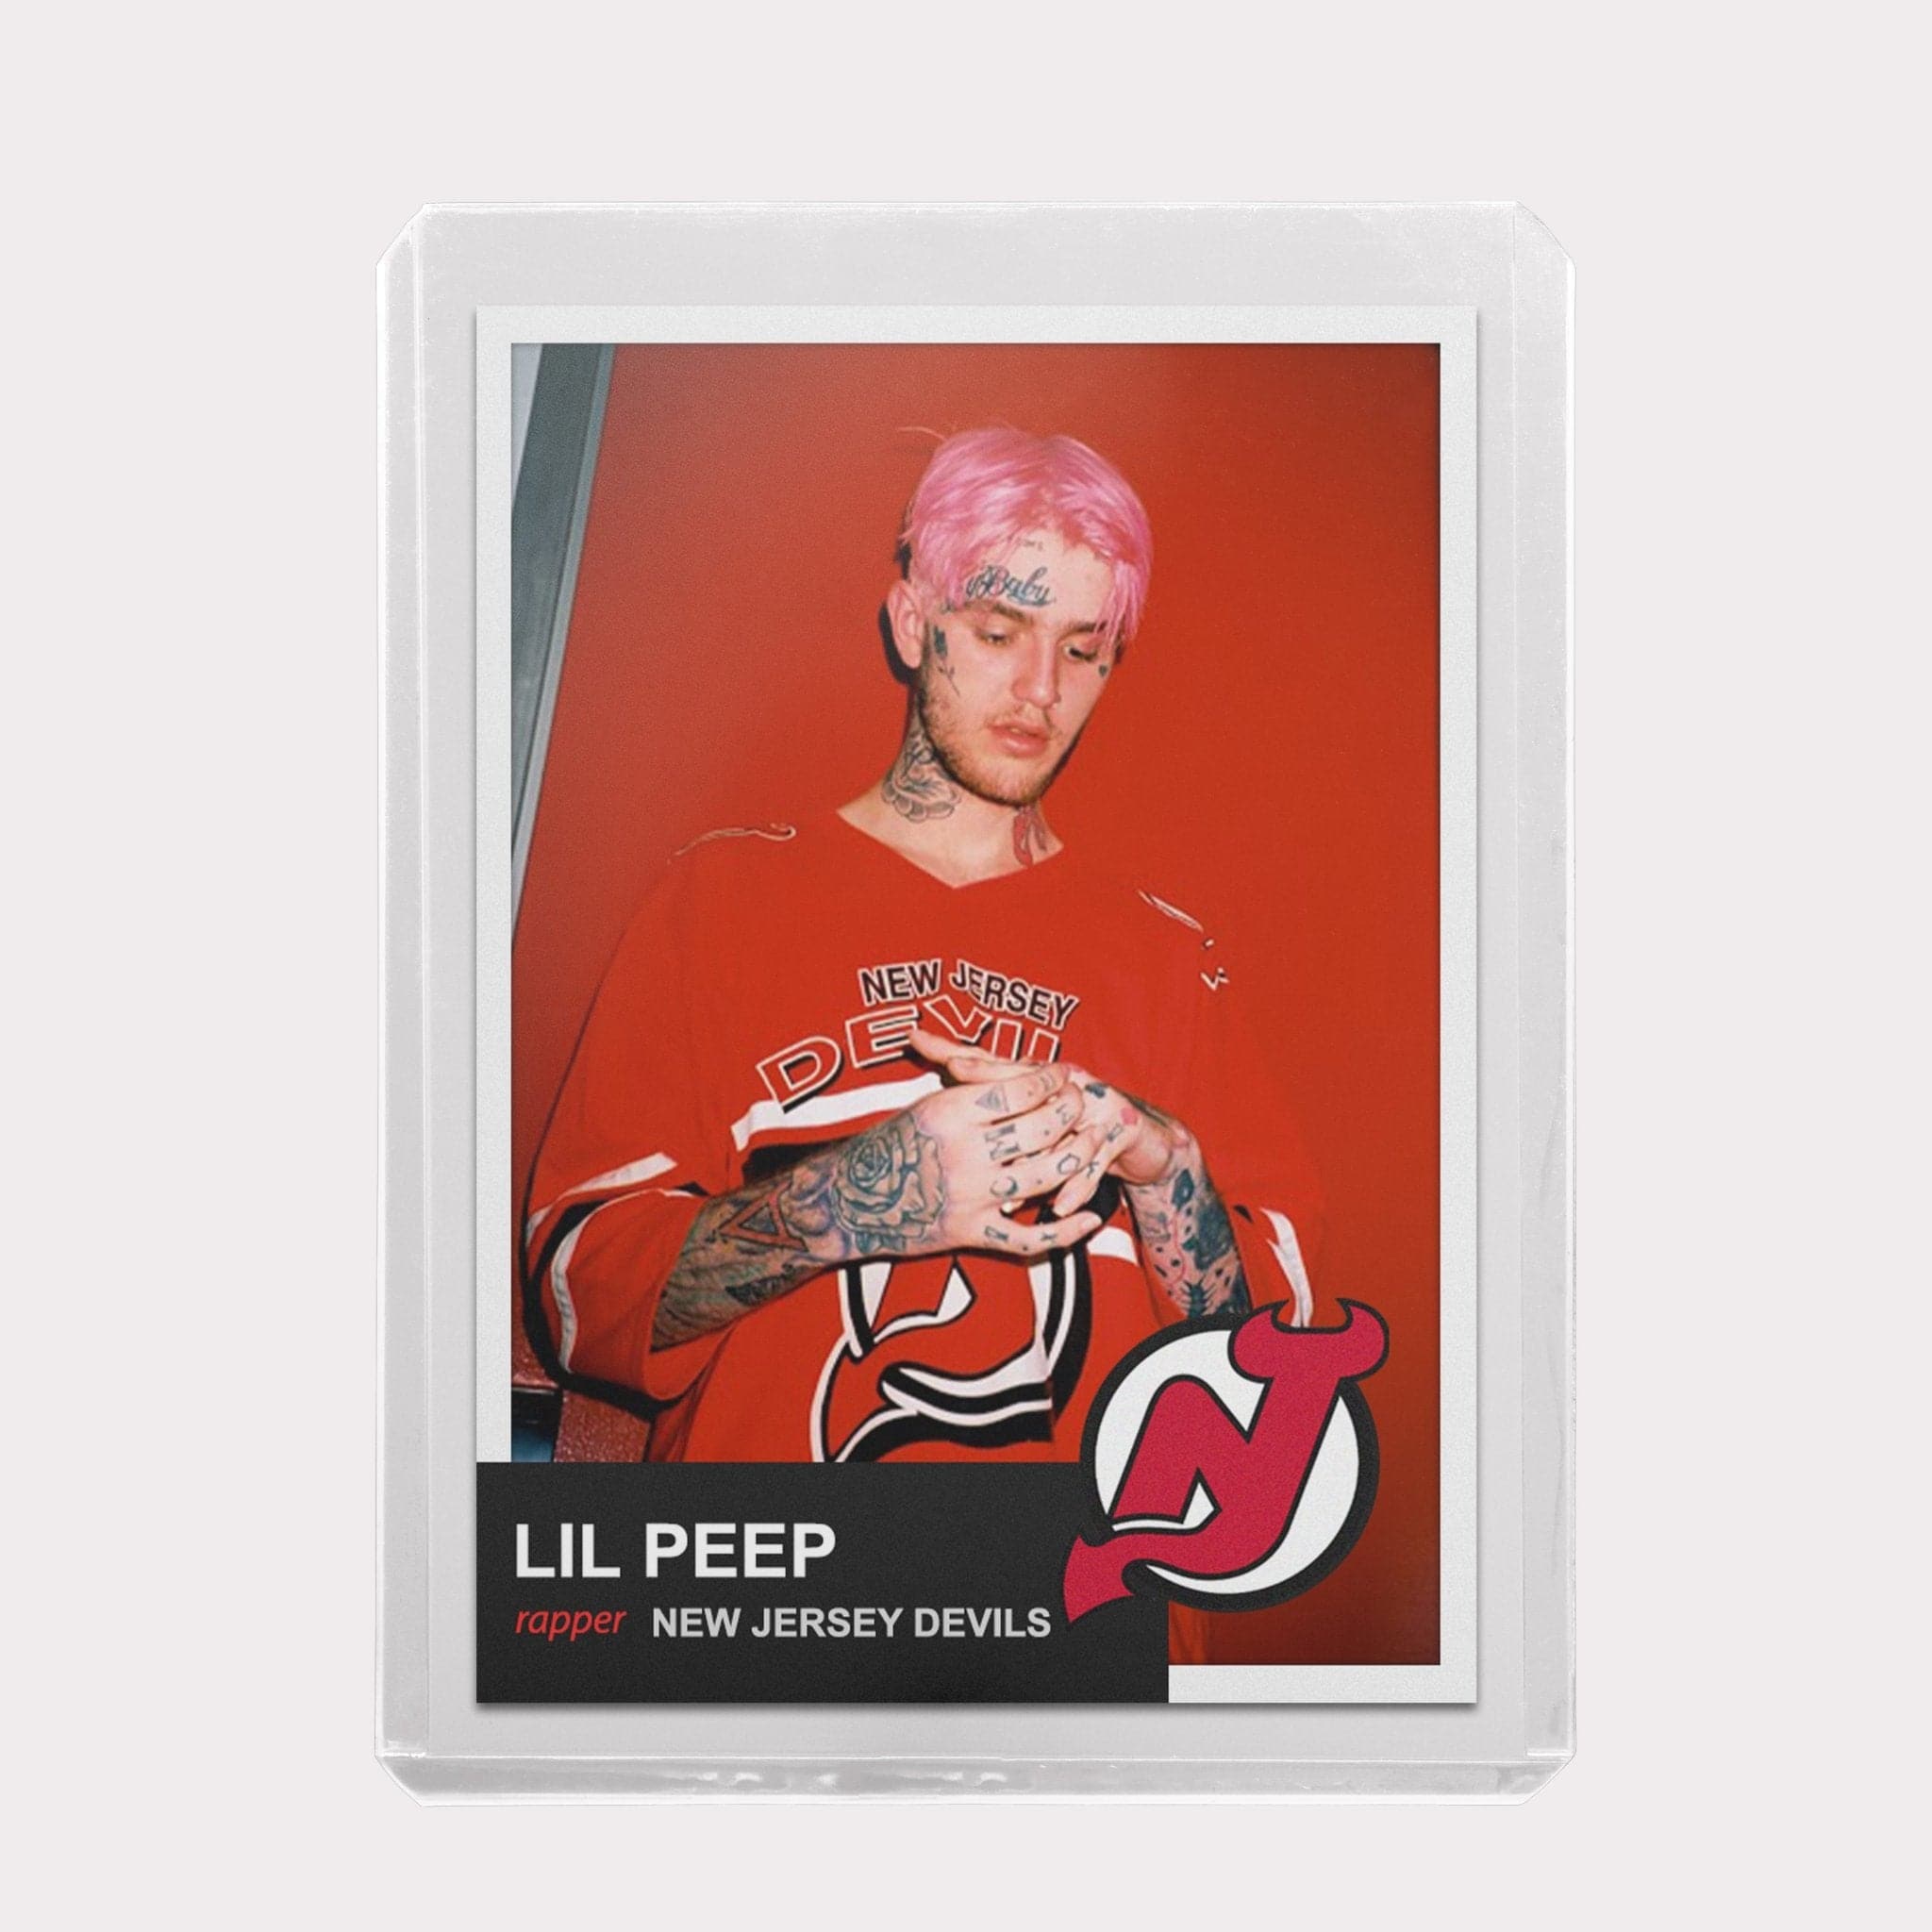 Lil Peep Jersey 